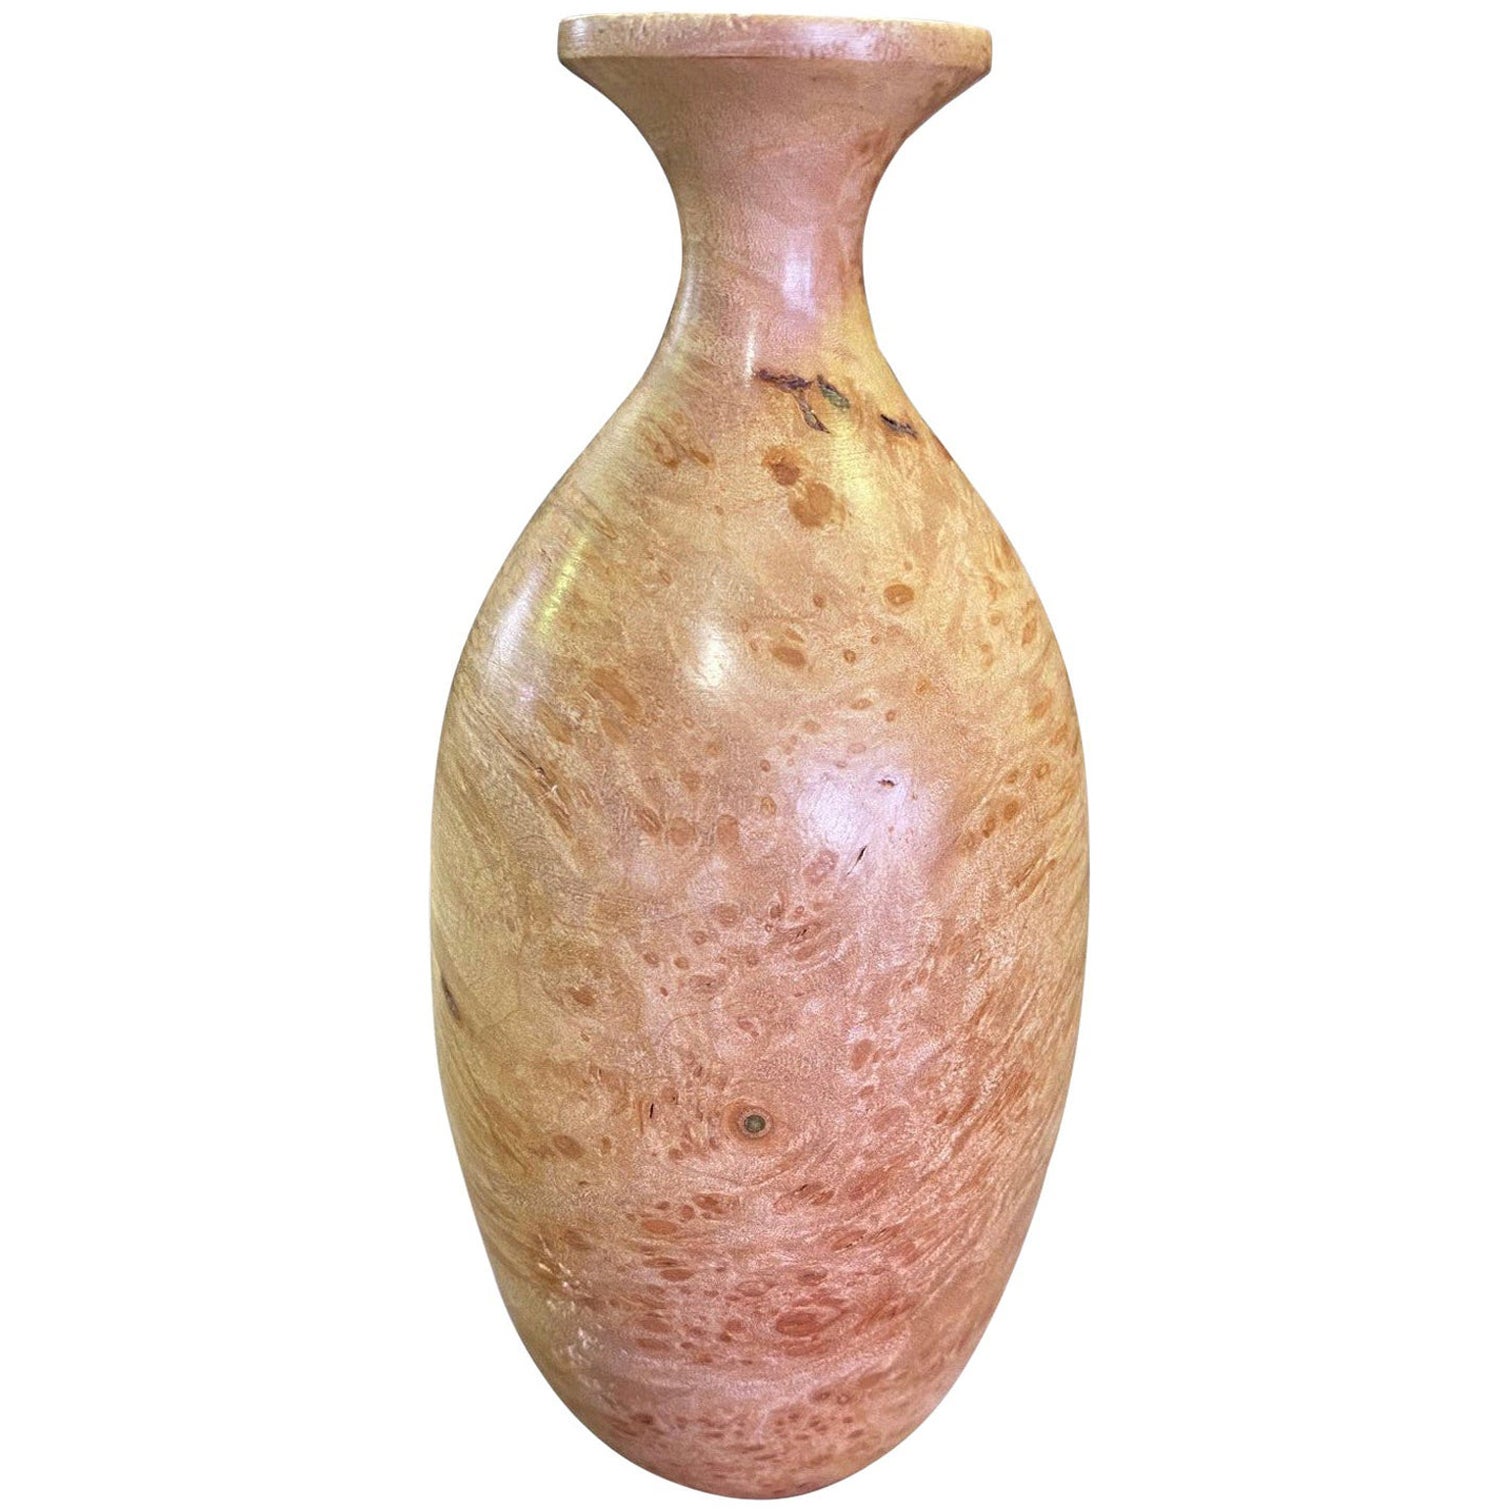 Bill Haskell Signed Carved Wood turned Maple Burl Wood Vase